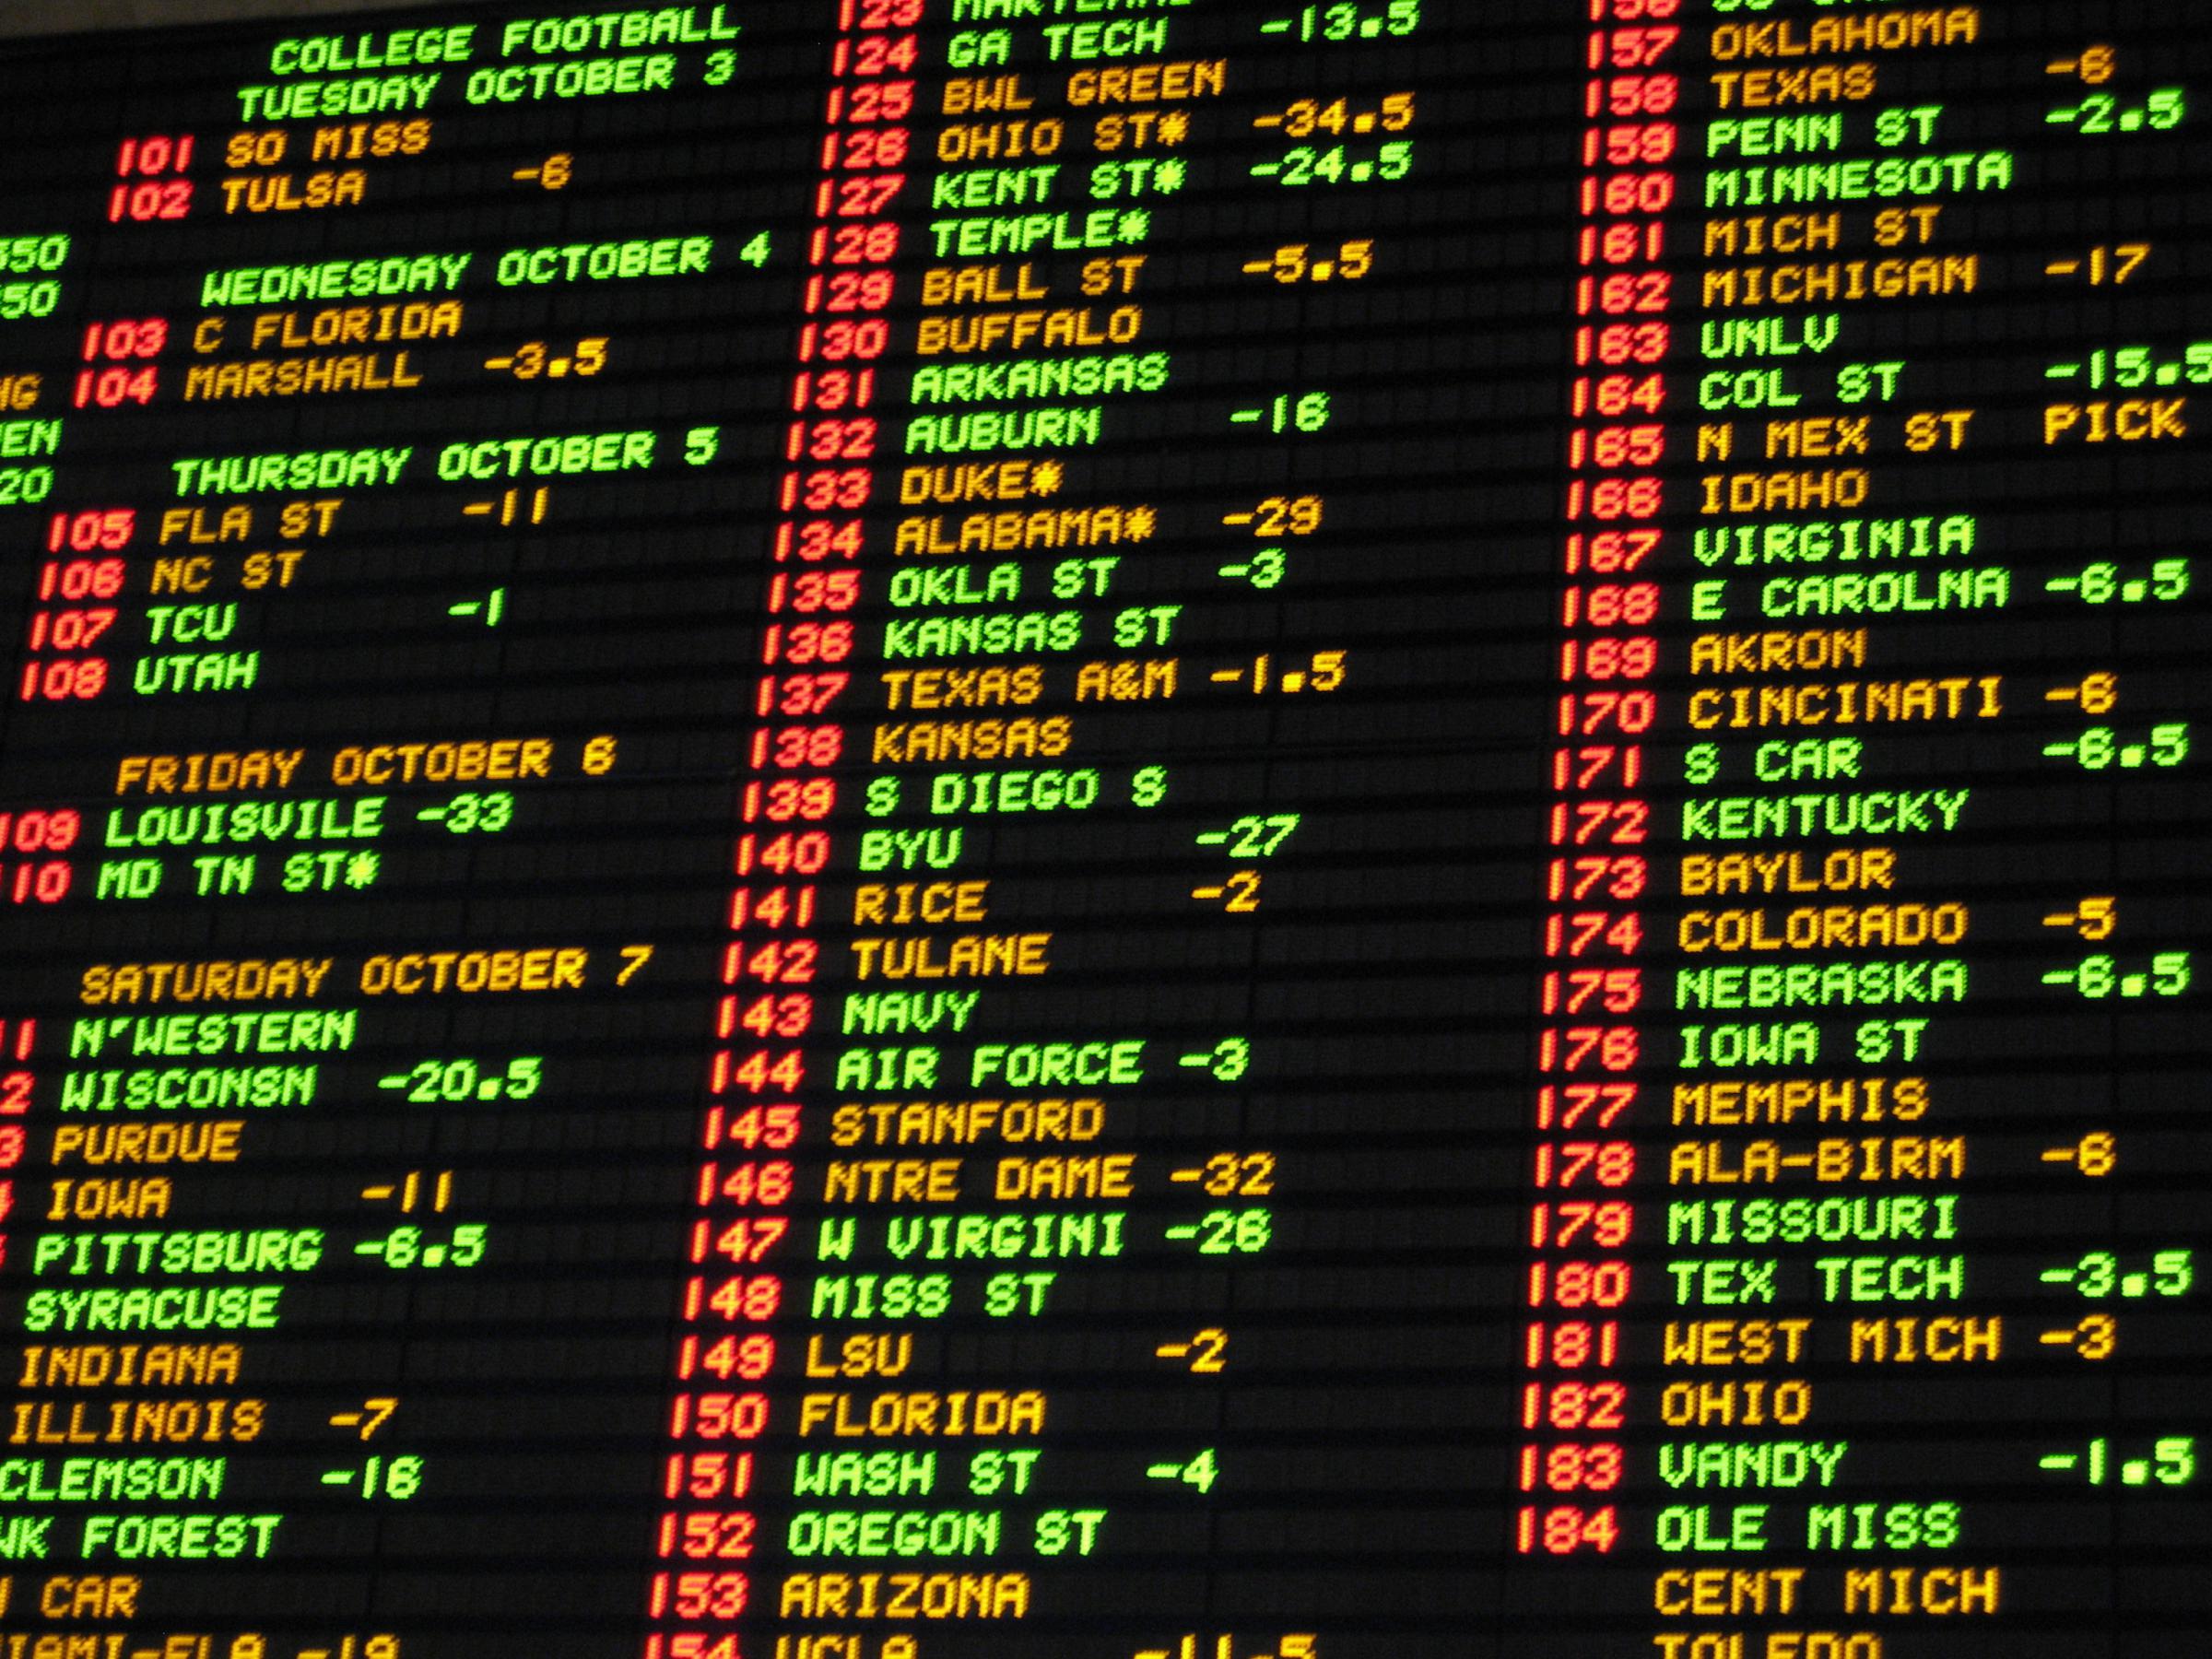 Legal sports betting in Ohio awaits DeWine’s signature